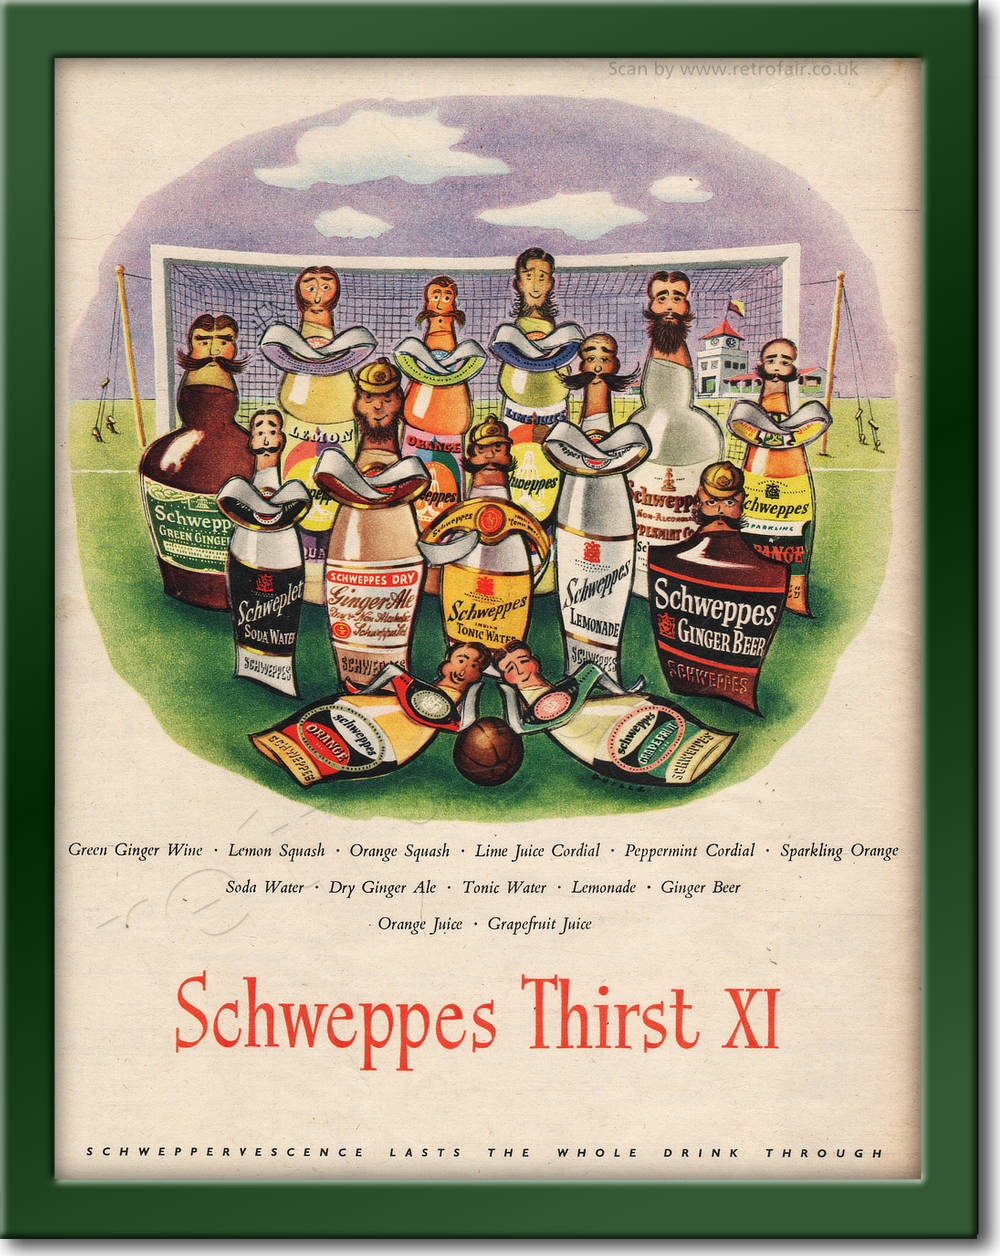 1954 vintage Schweppes advert